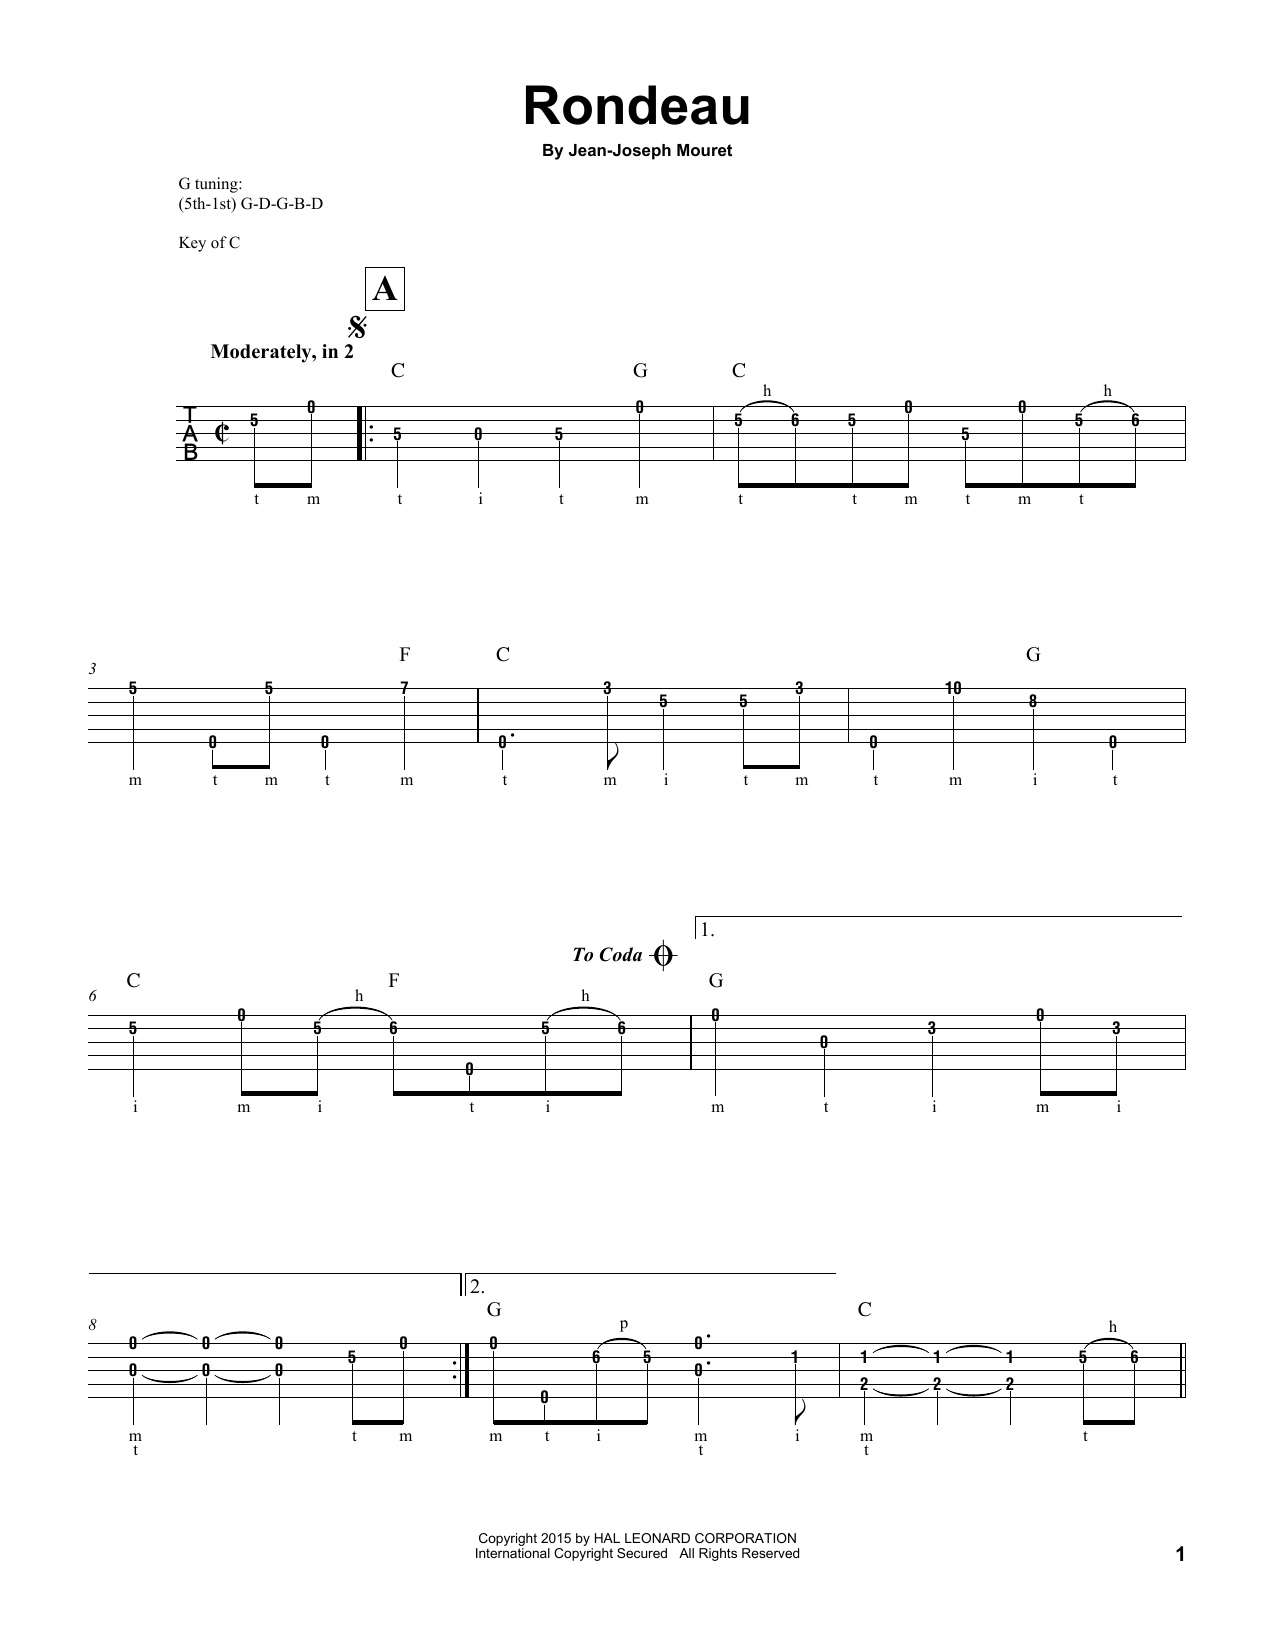 Jean-Joseph Mouret Fanfare Rondeau Sheet Music Notes & Chords for VLNDT - Download or Print PDF